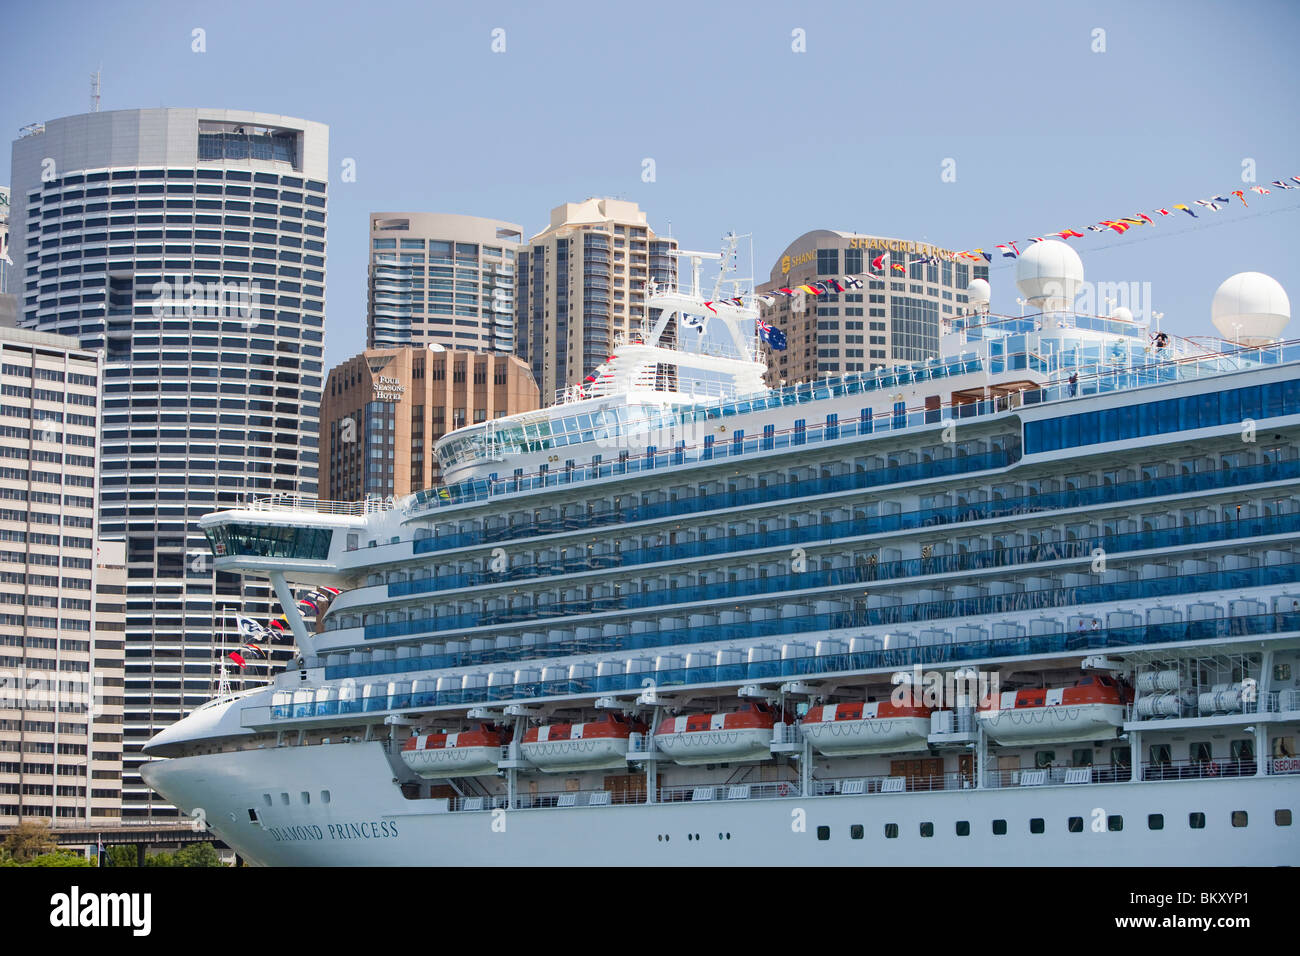 The Diamond Princess cruise ship in Sydney Harbour, Australia. Stock Photo